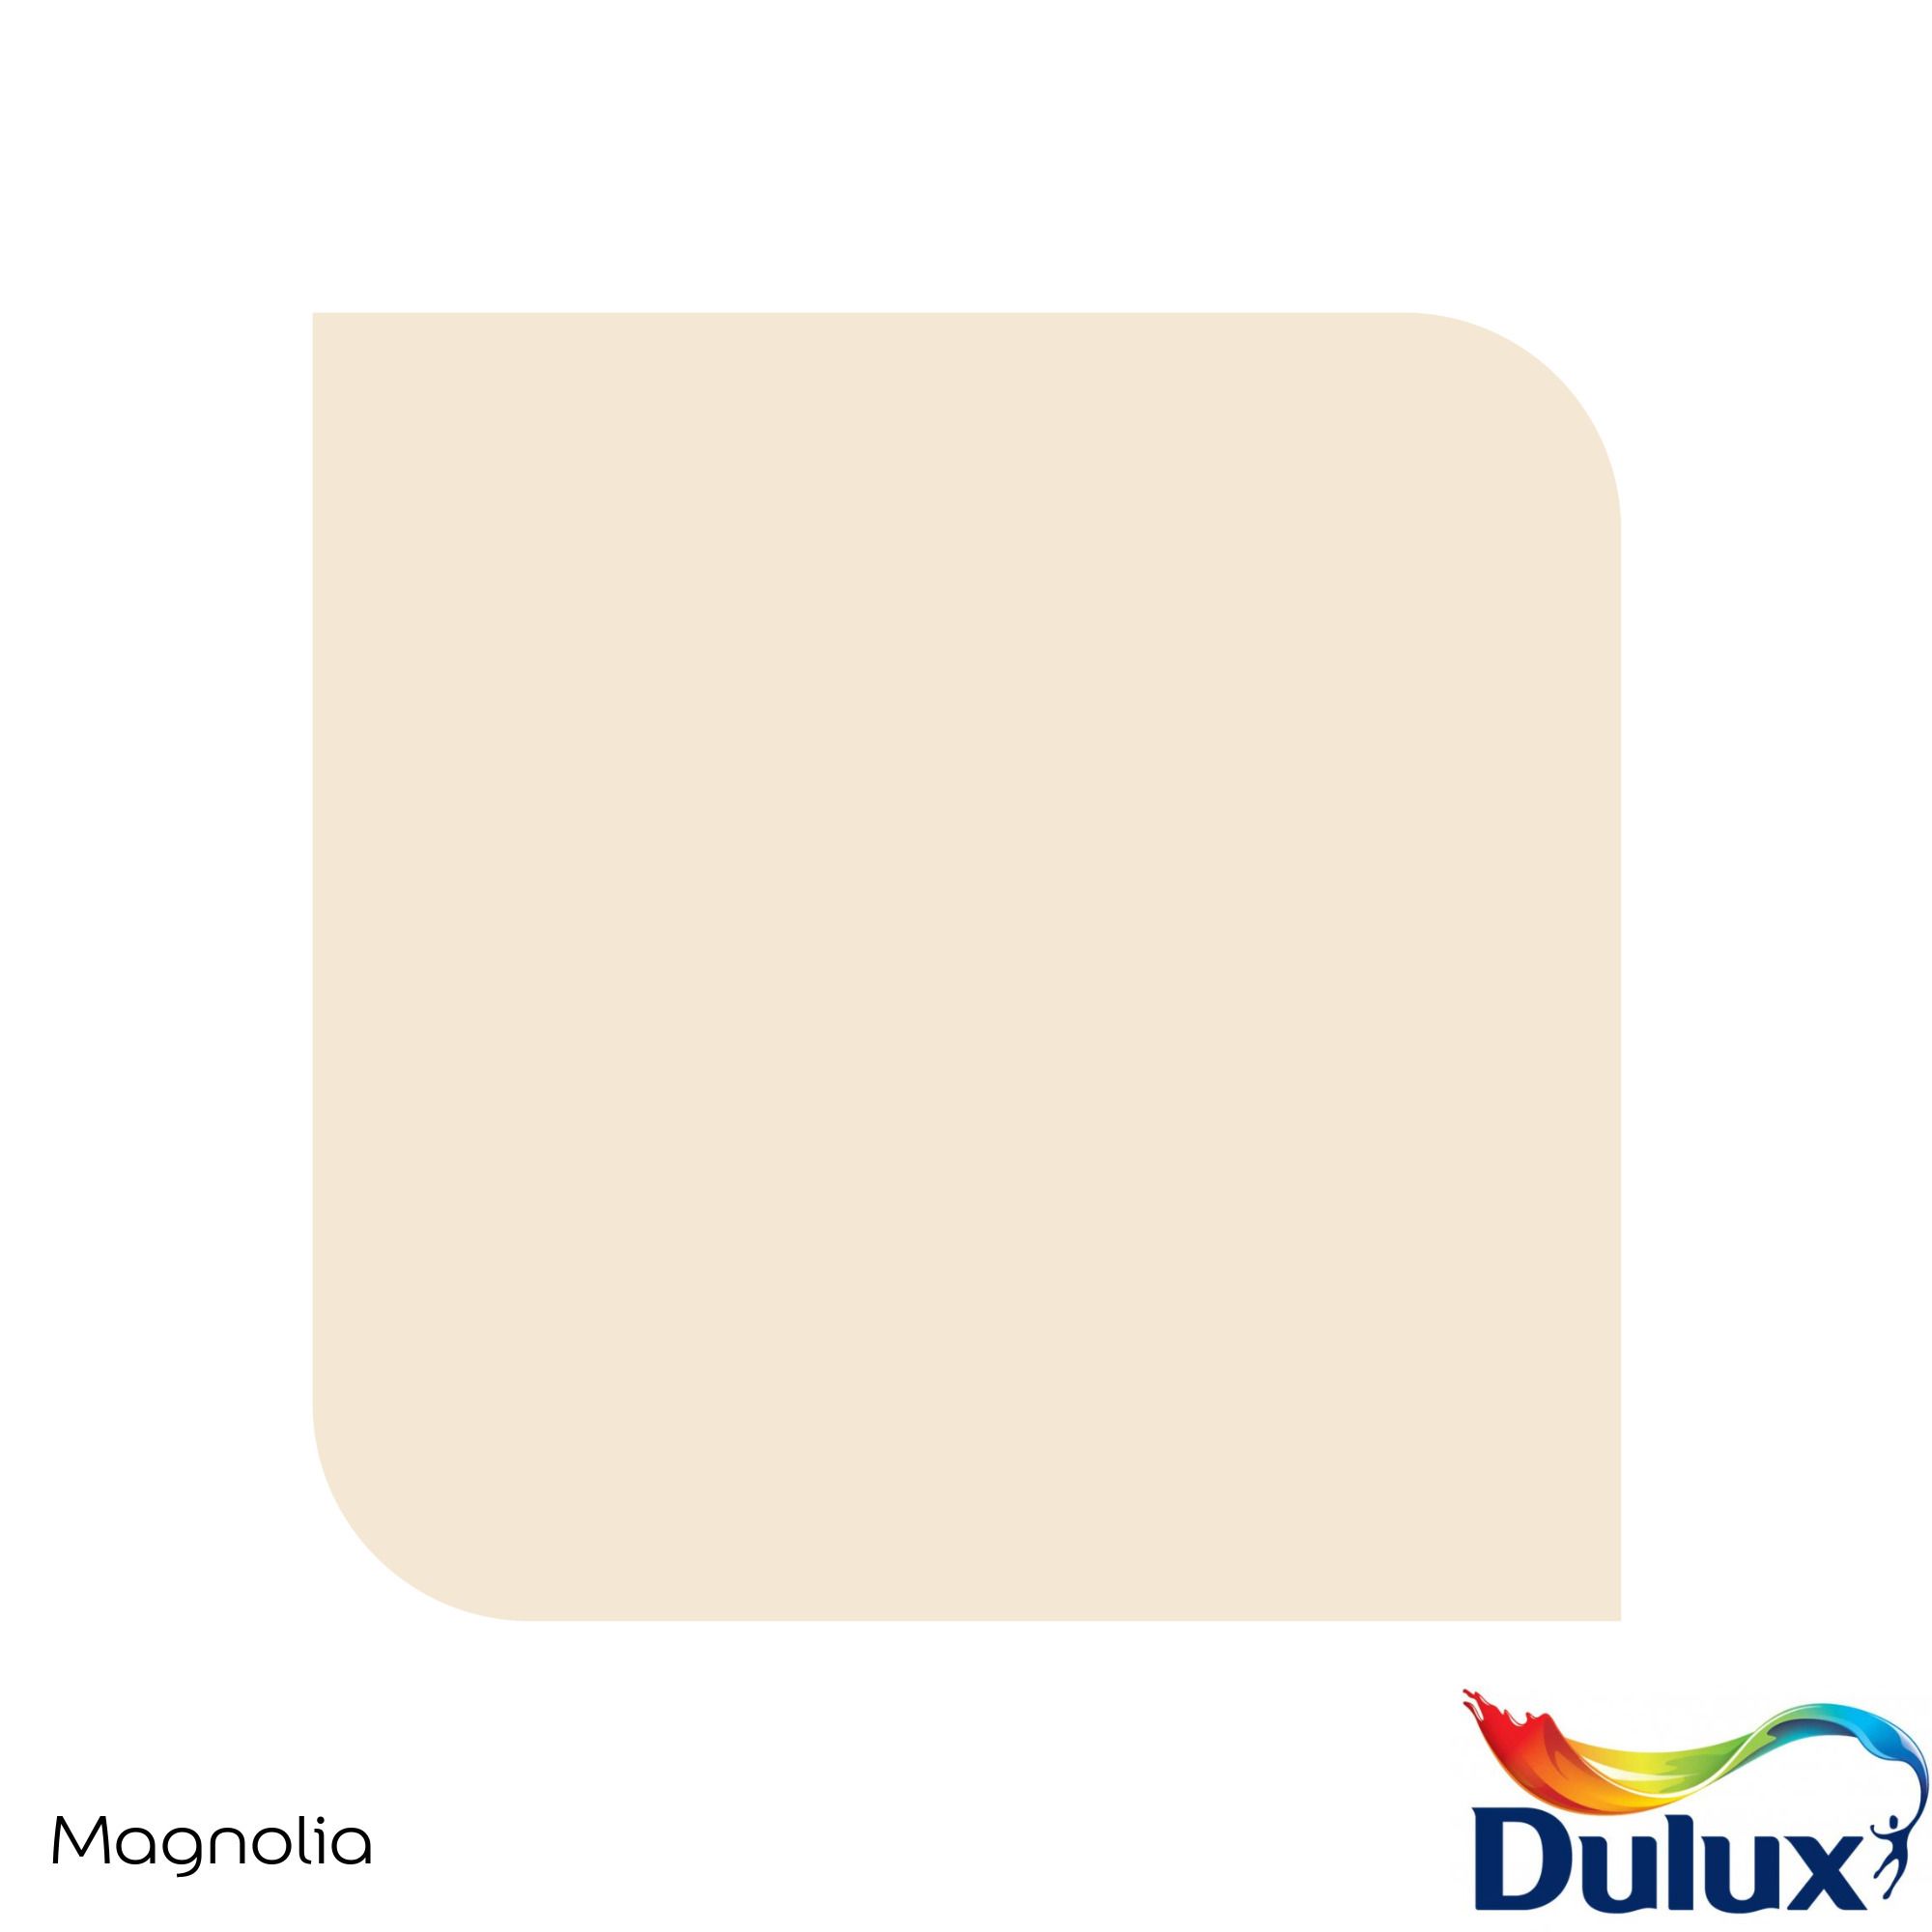 Dulux Standard Magnolia Matt Emulsion paint, 30ml Tester pot